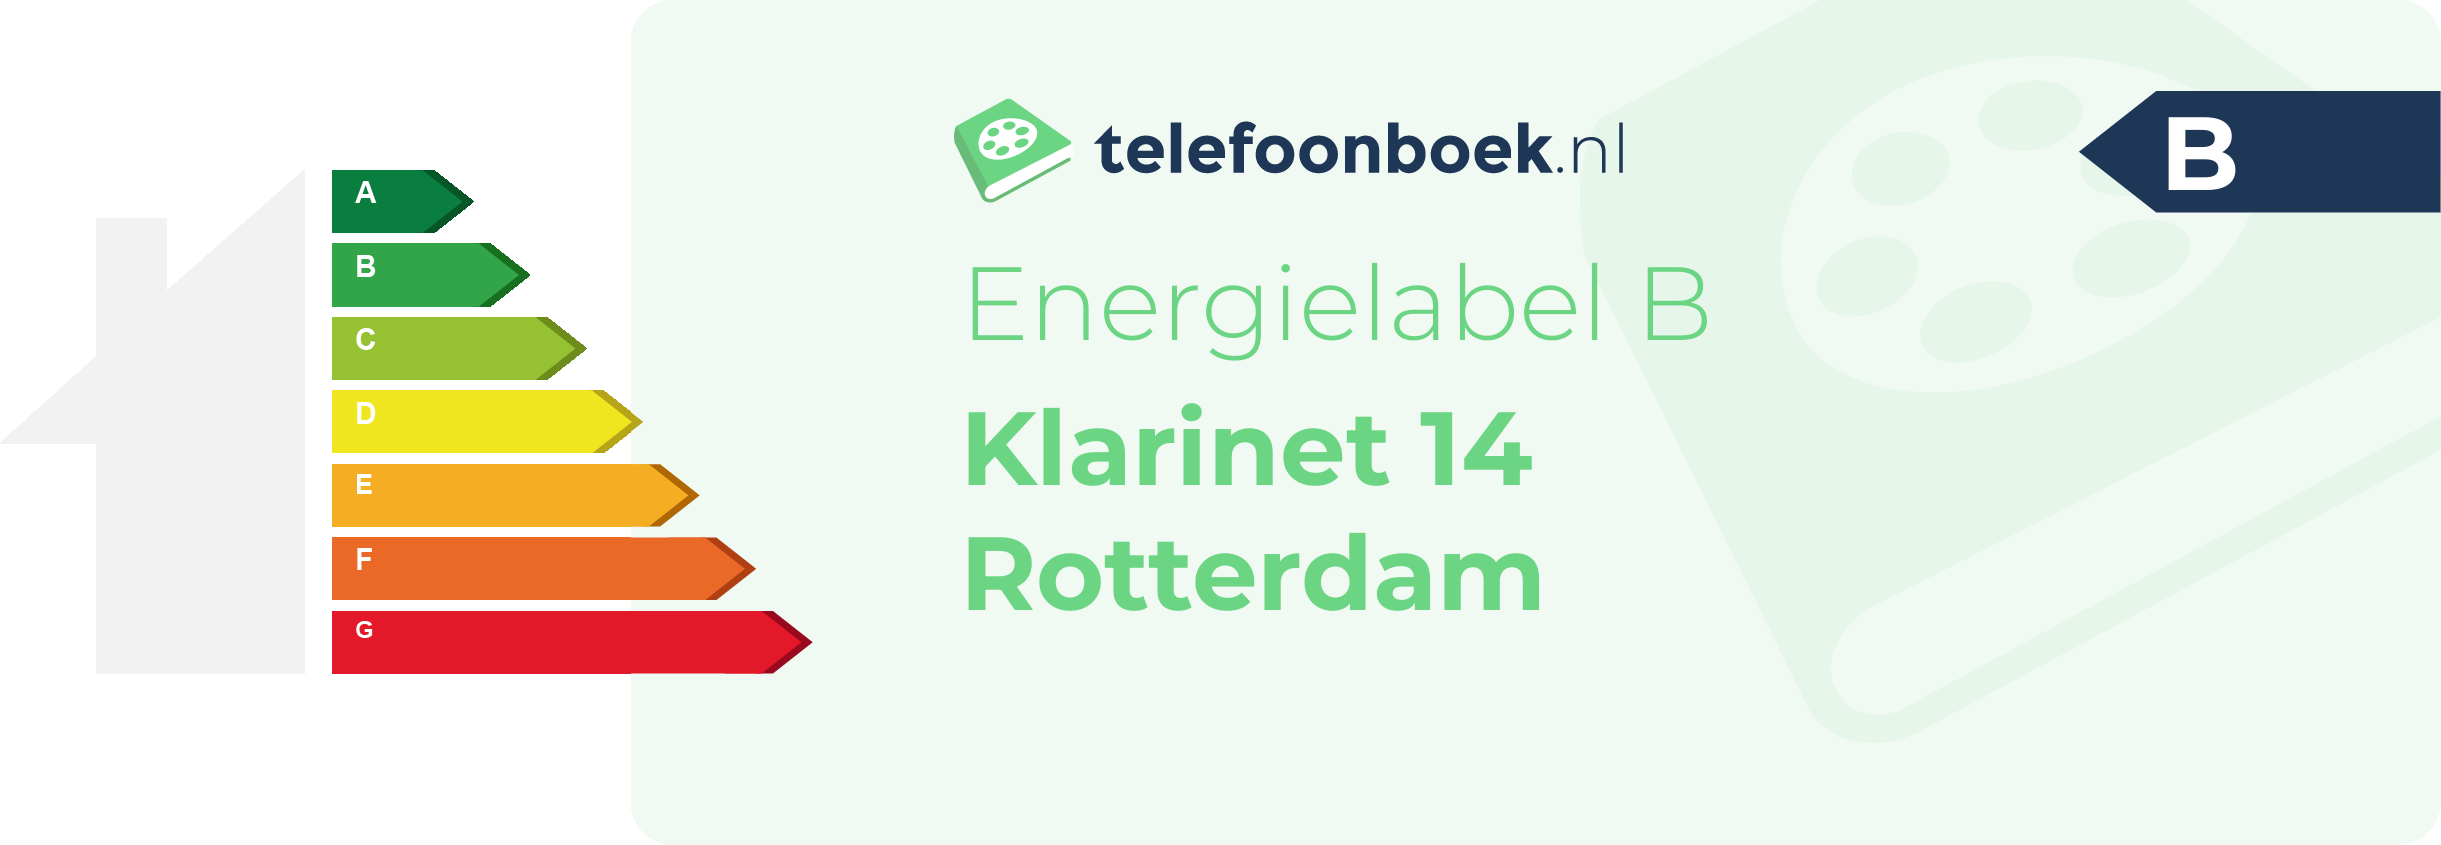 Energielabel Klarinet 14 Rotterdam